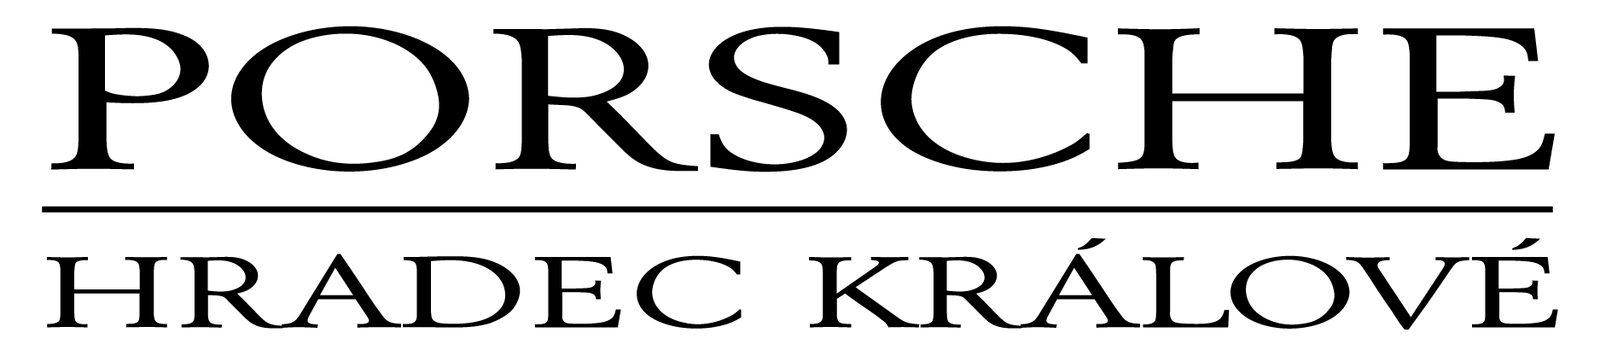 2190288_porsche_hk_logo_black_transparent